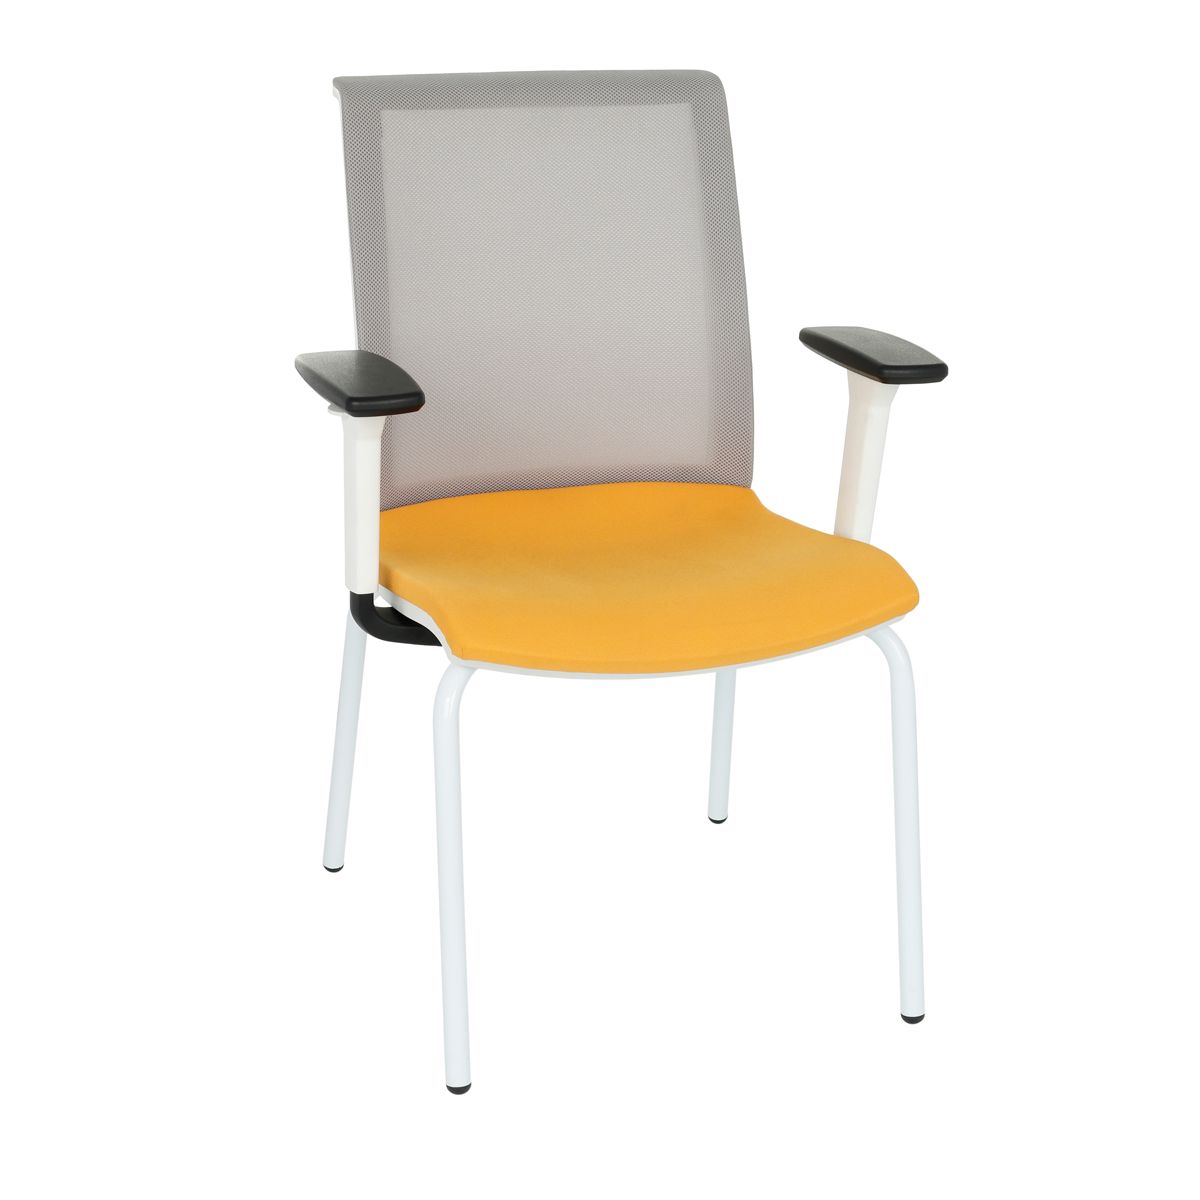 NABBI Libon 4L WS R1 konferenčná stolička s podrúčkami žltá / sivá / biela - nabbi.sk